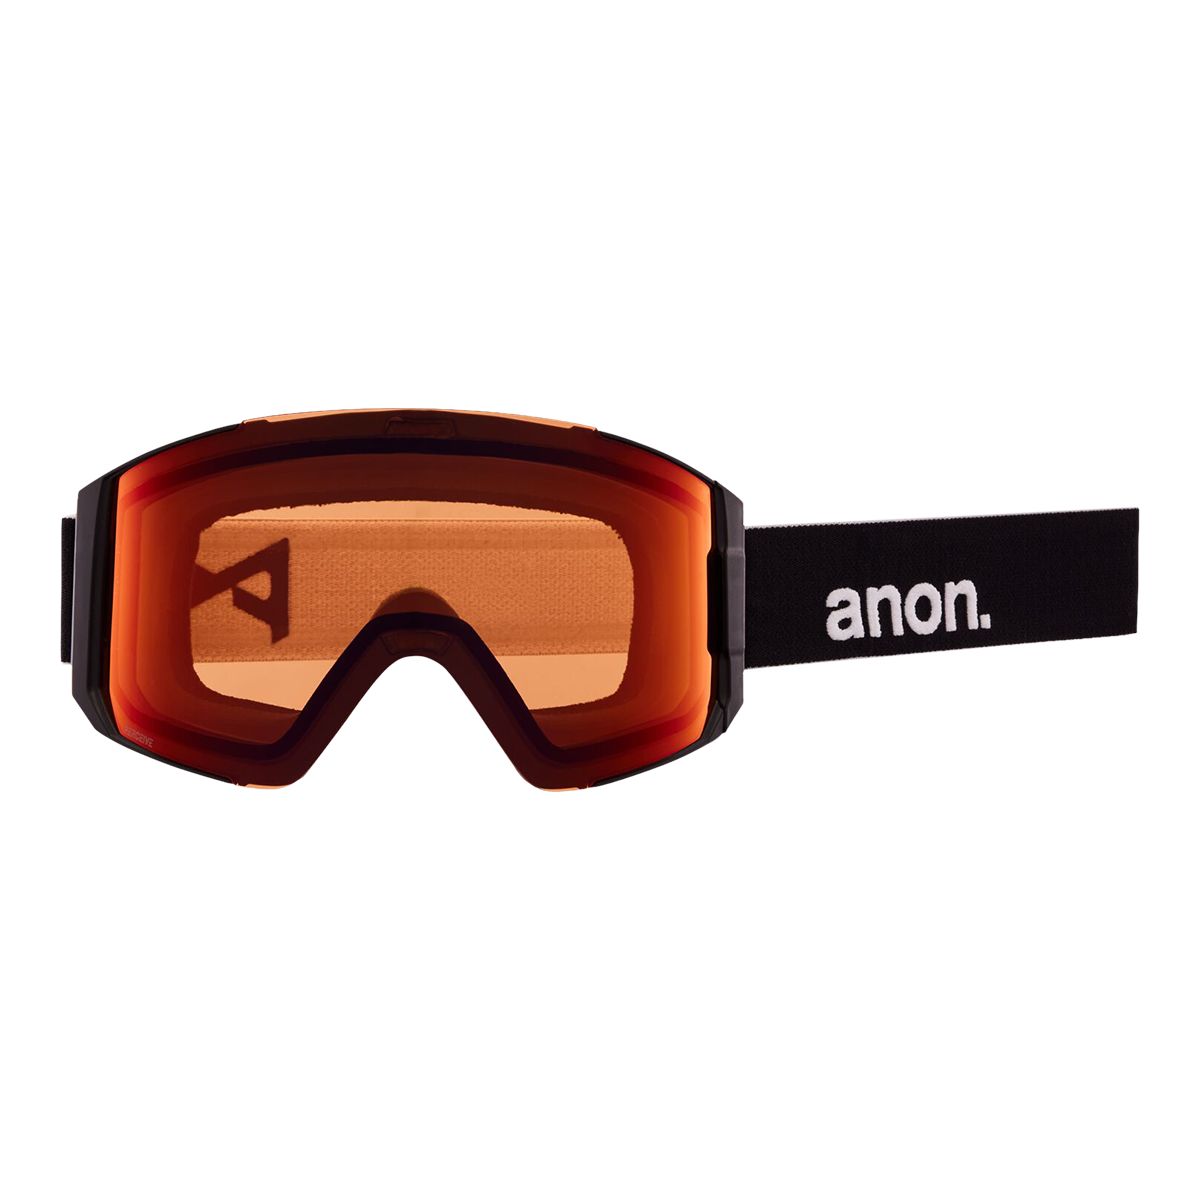 Anon Sync Ski & Snowboard Goggles 2021/22 Black with Perceive Sunny Red Lens + Bonus Lens